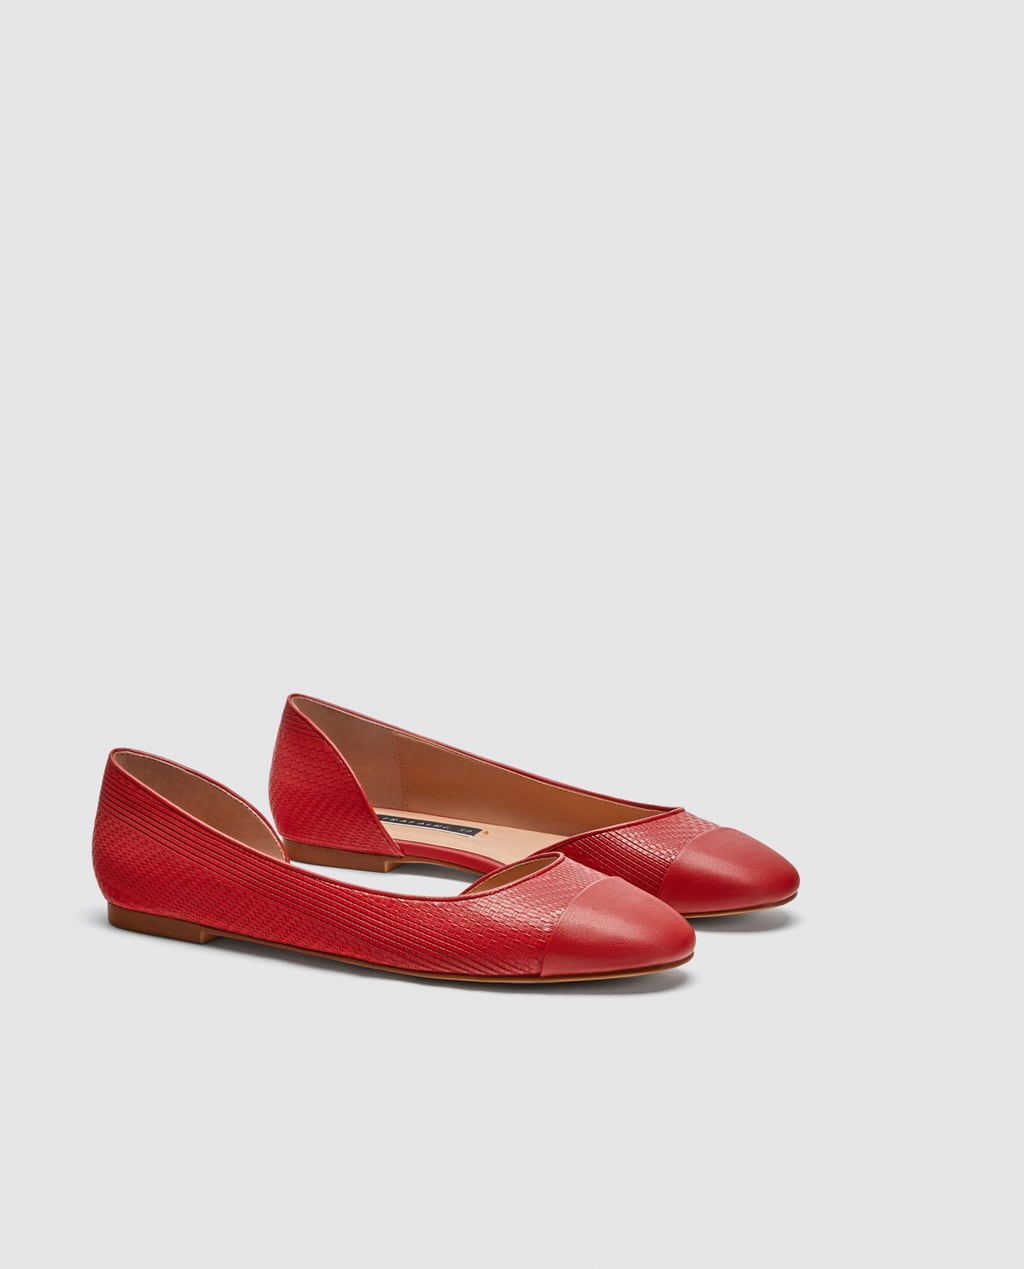 Pantofi rosii Zara 69.90 lei